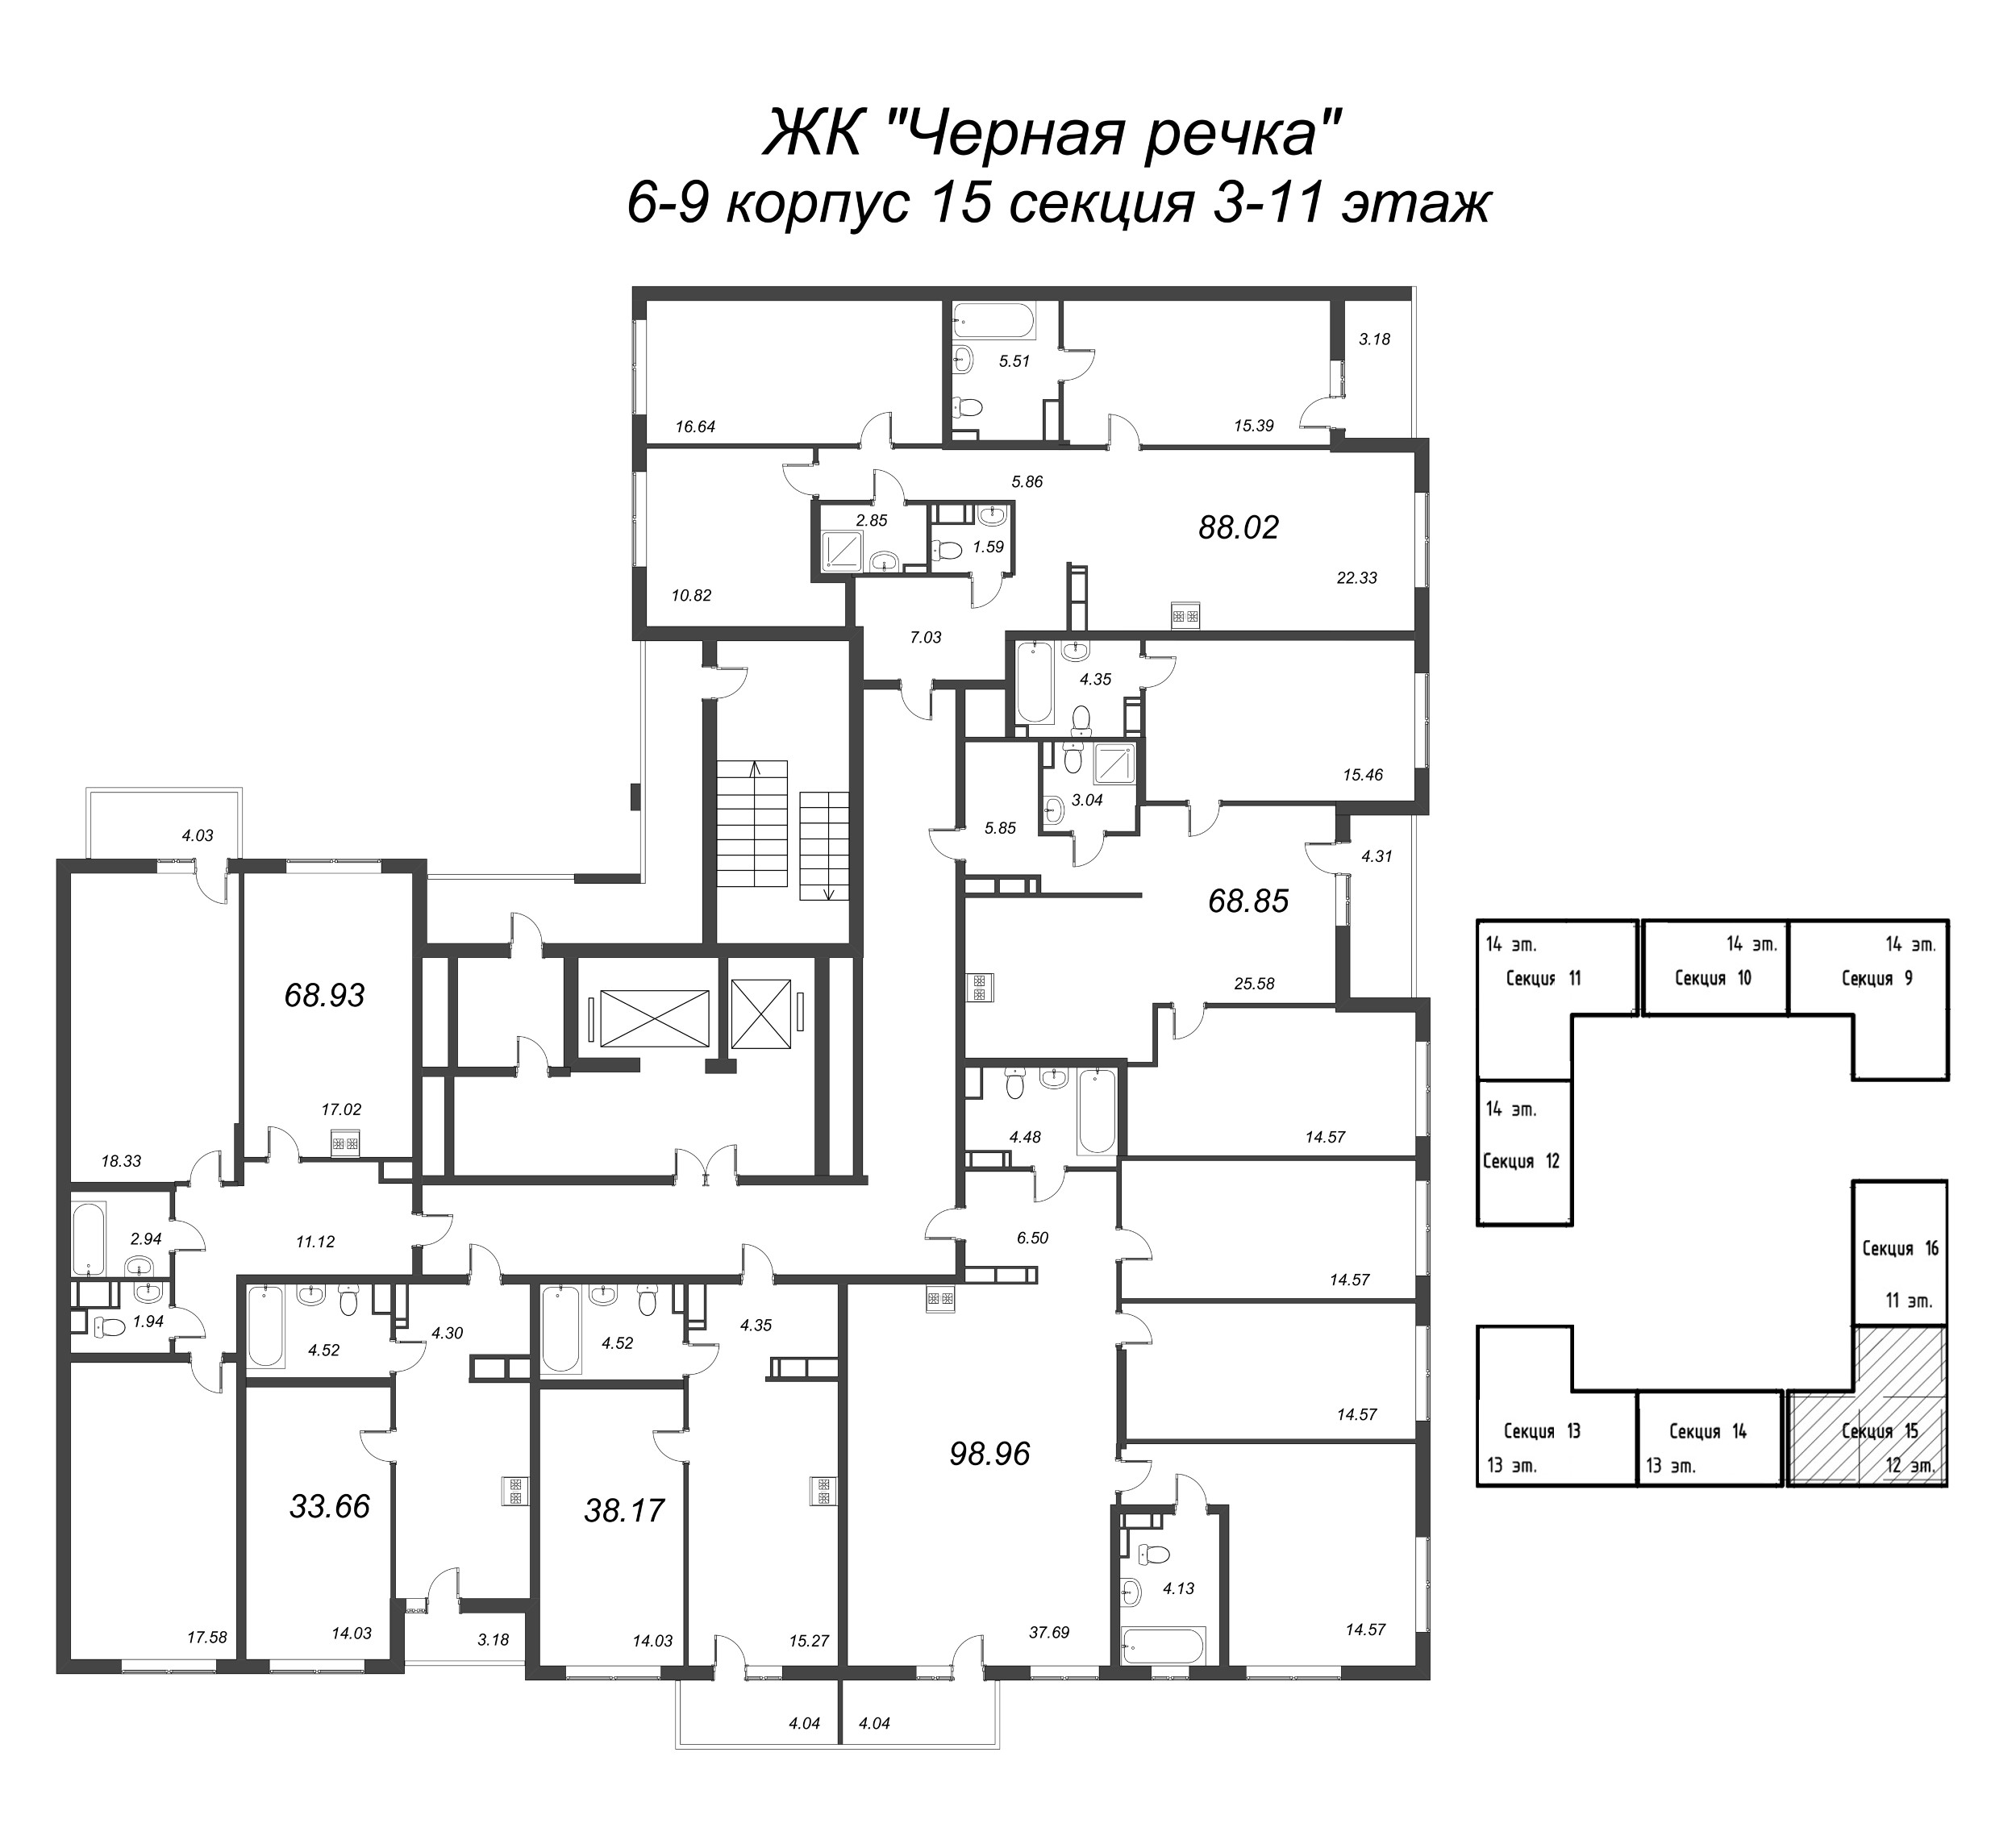 4-комнатная (Евро) квартира, 98.96 м² - планировка этажа